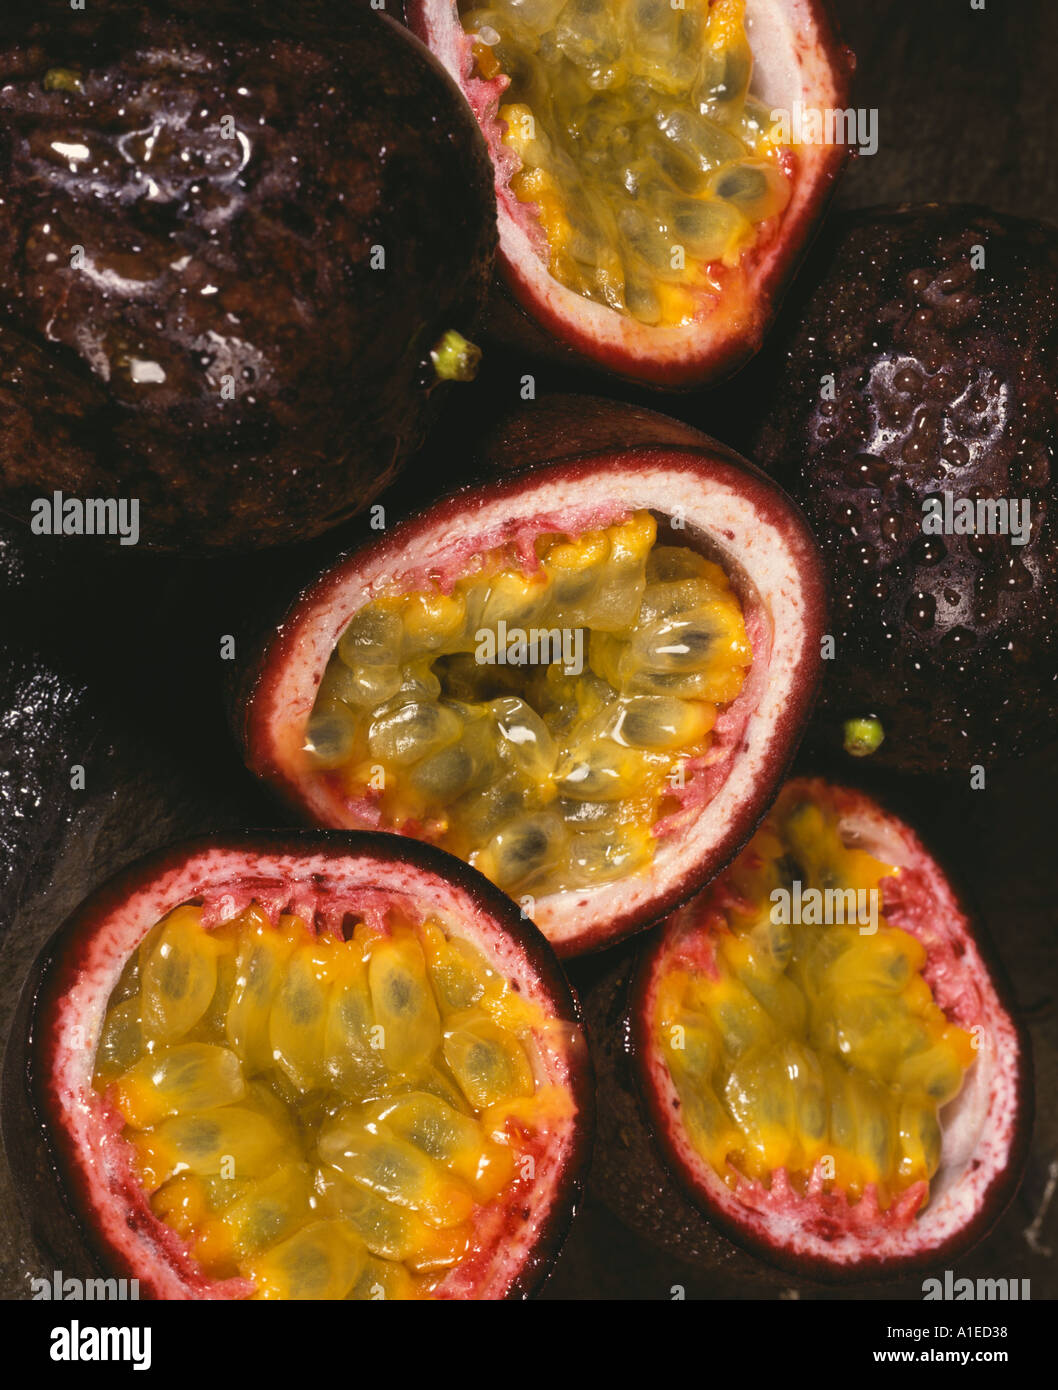 sliced passion fruit Stock Photo